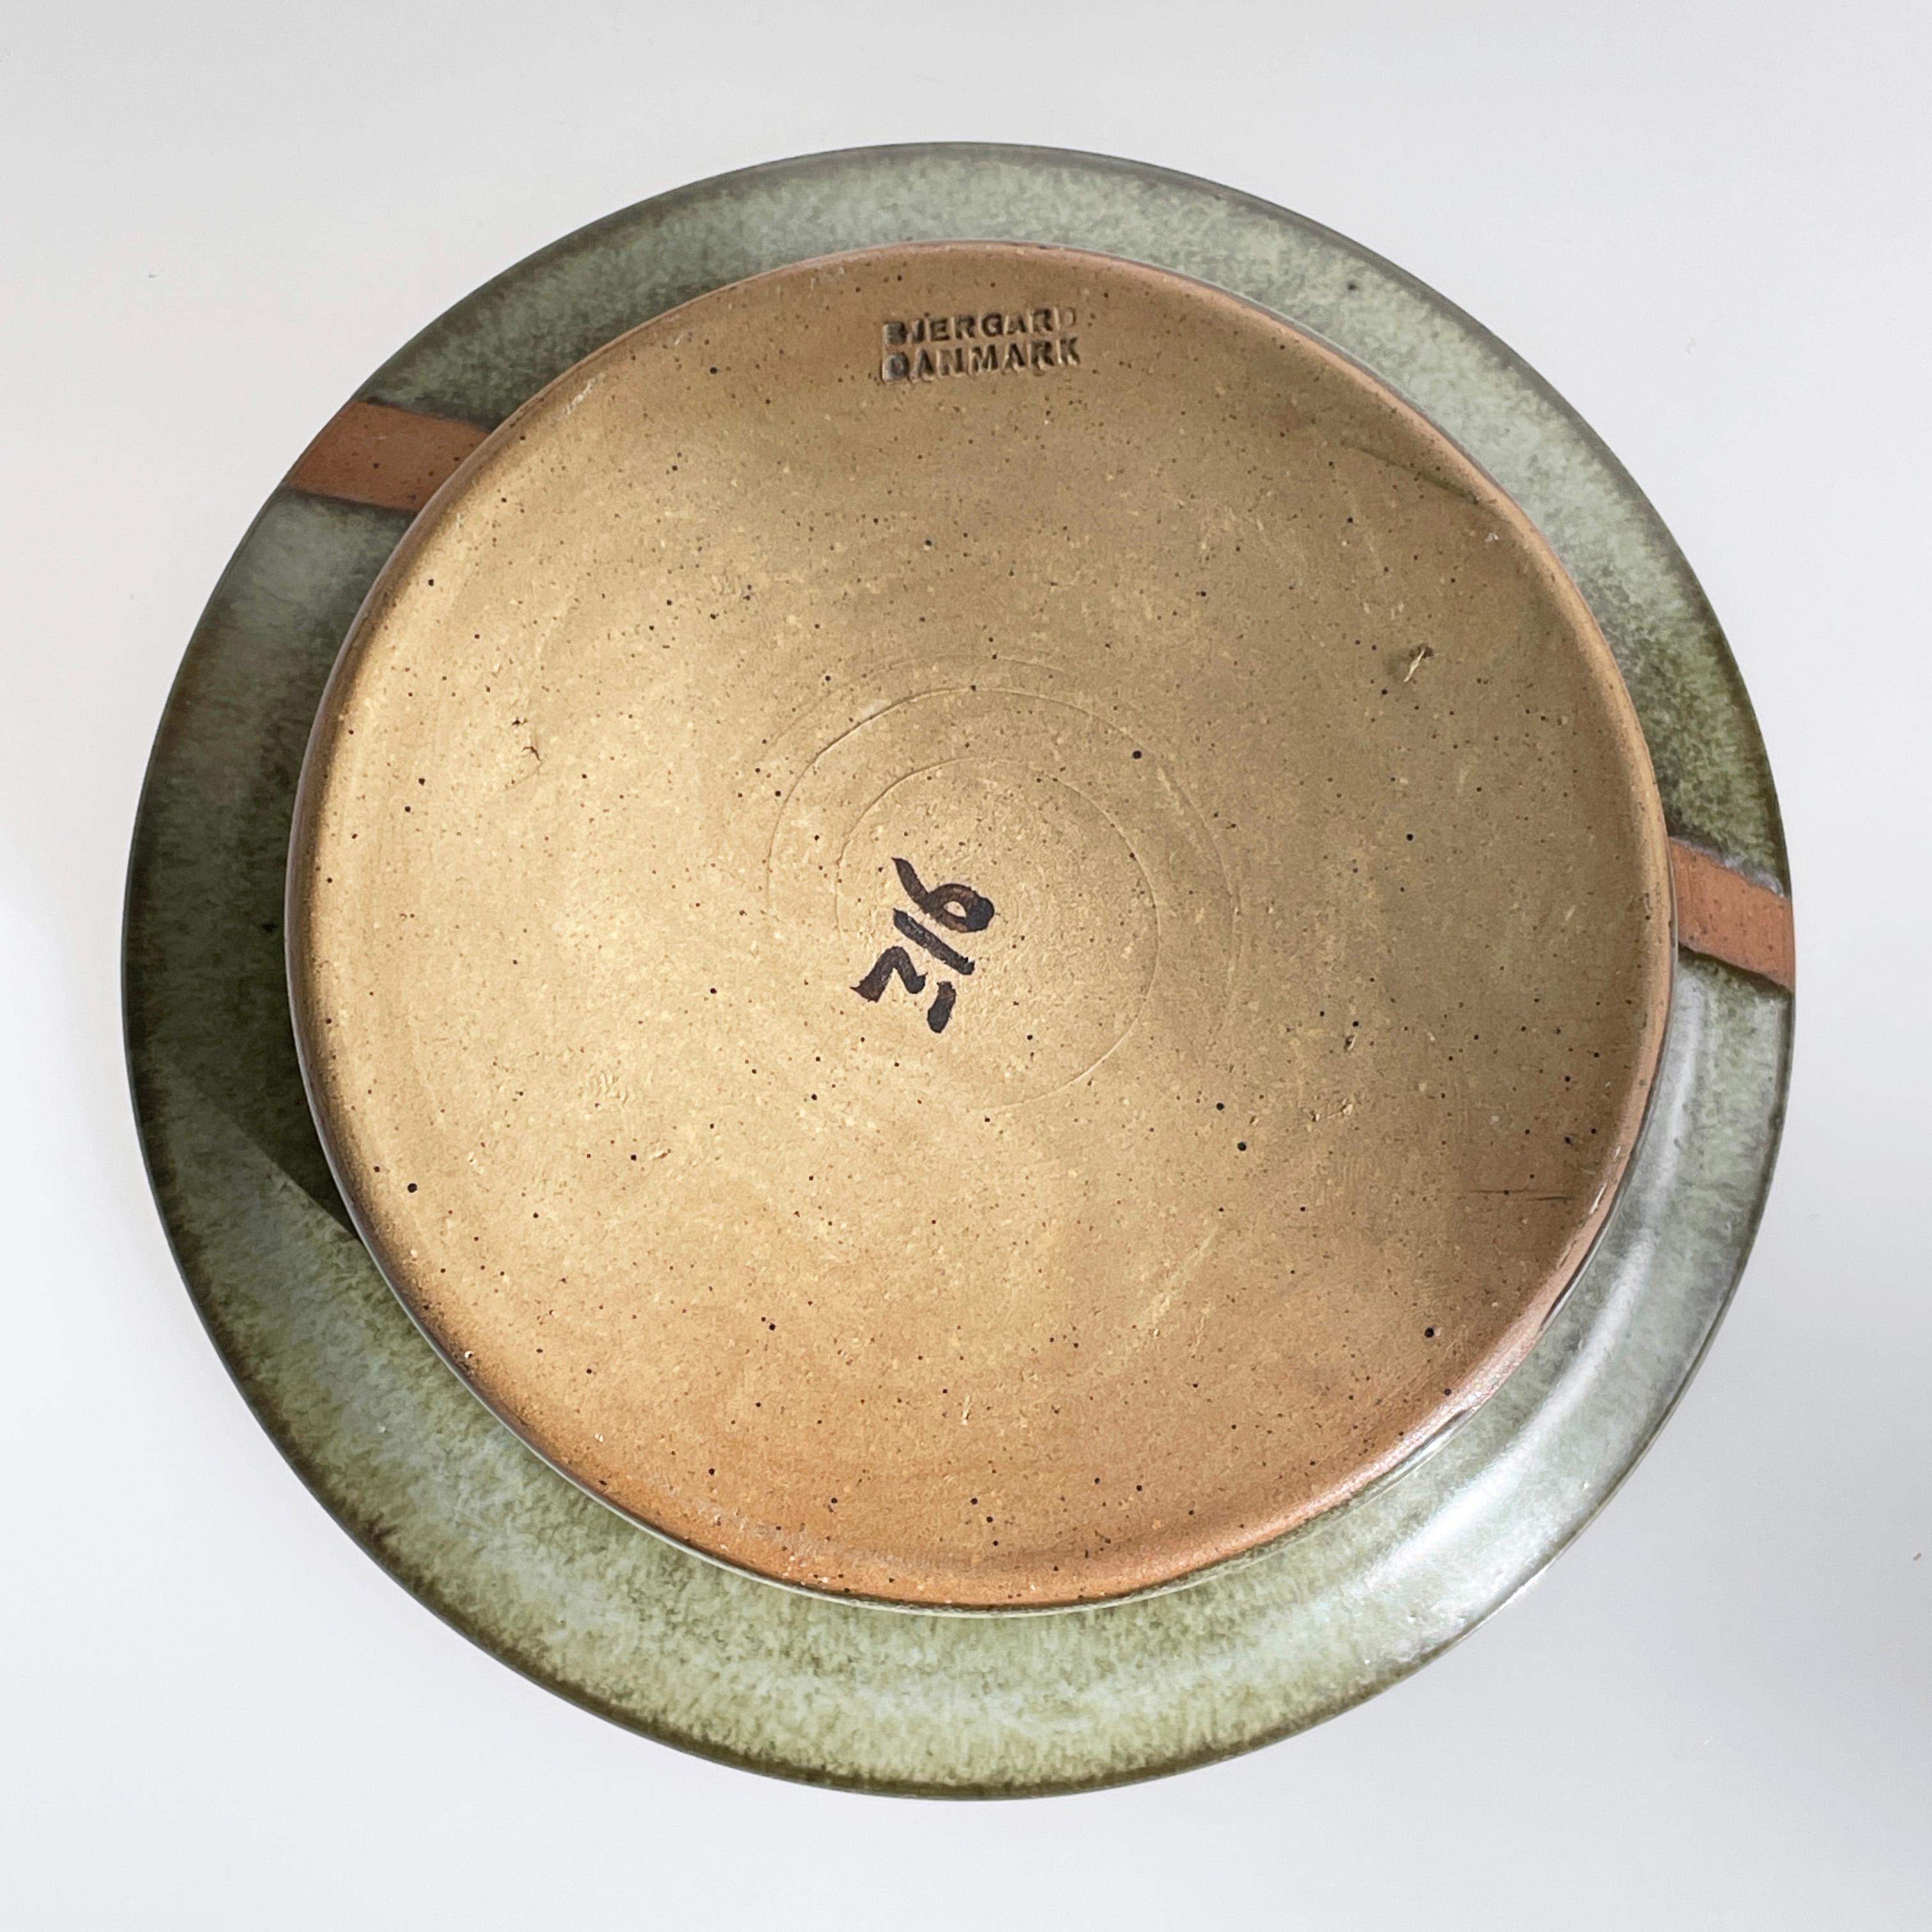 1970's Ceramic Bowl by Bjergard, Denmark For Sale 3